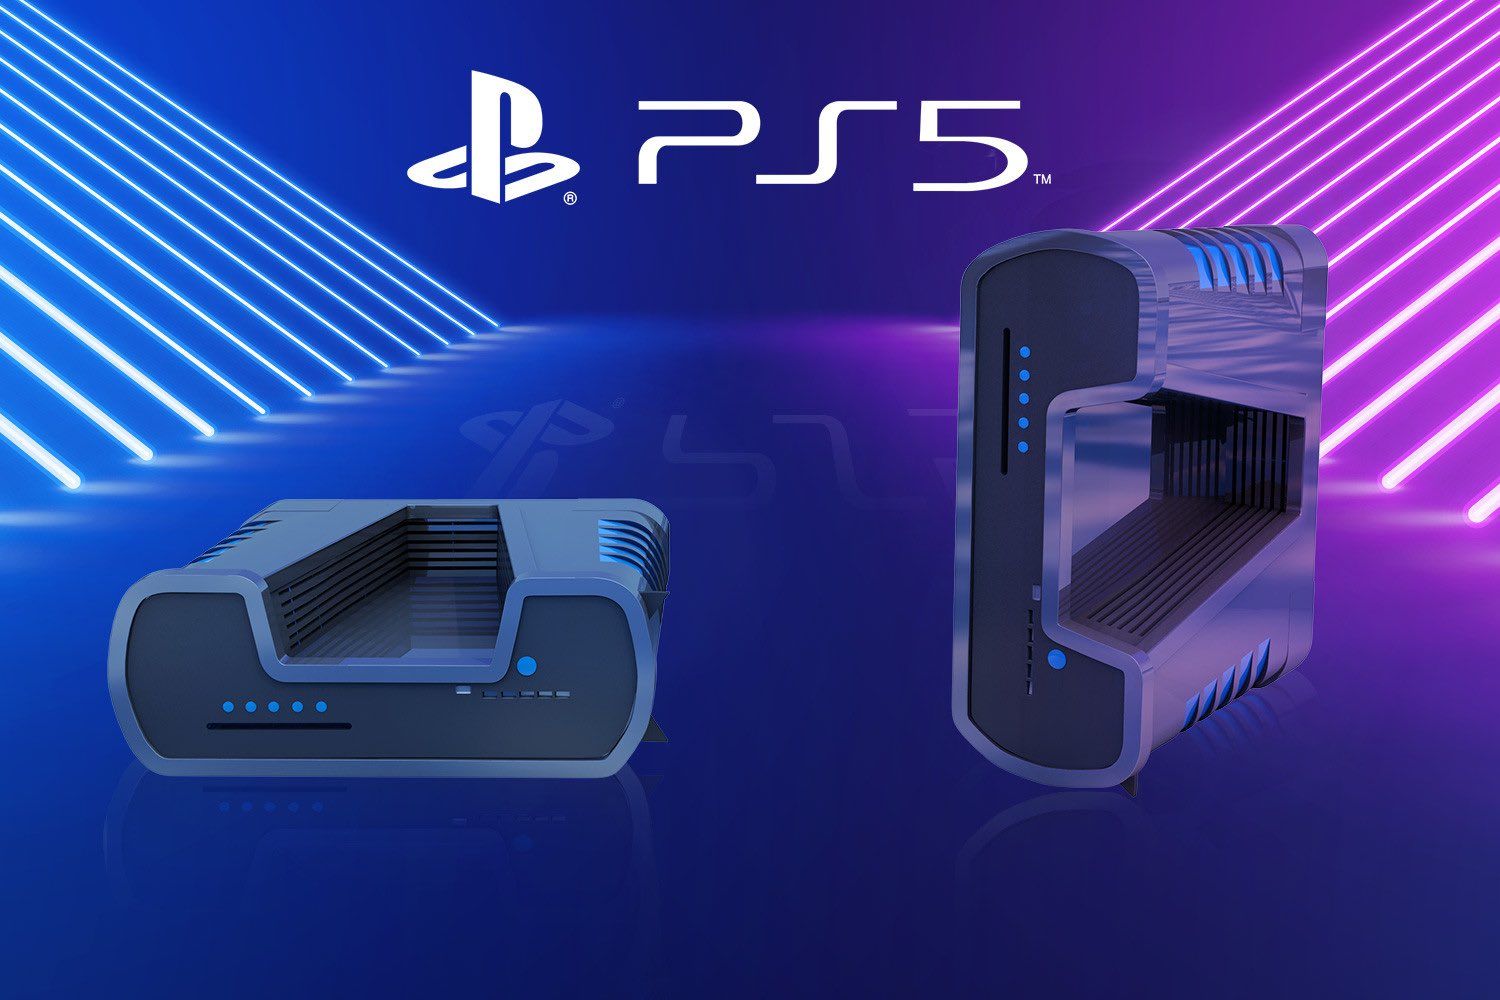 Bombazo! Playstation presentación de PS5 para mañana día 18 - AllGamersIn